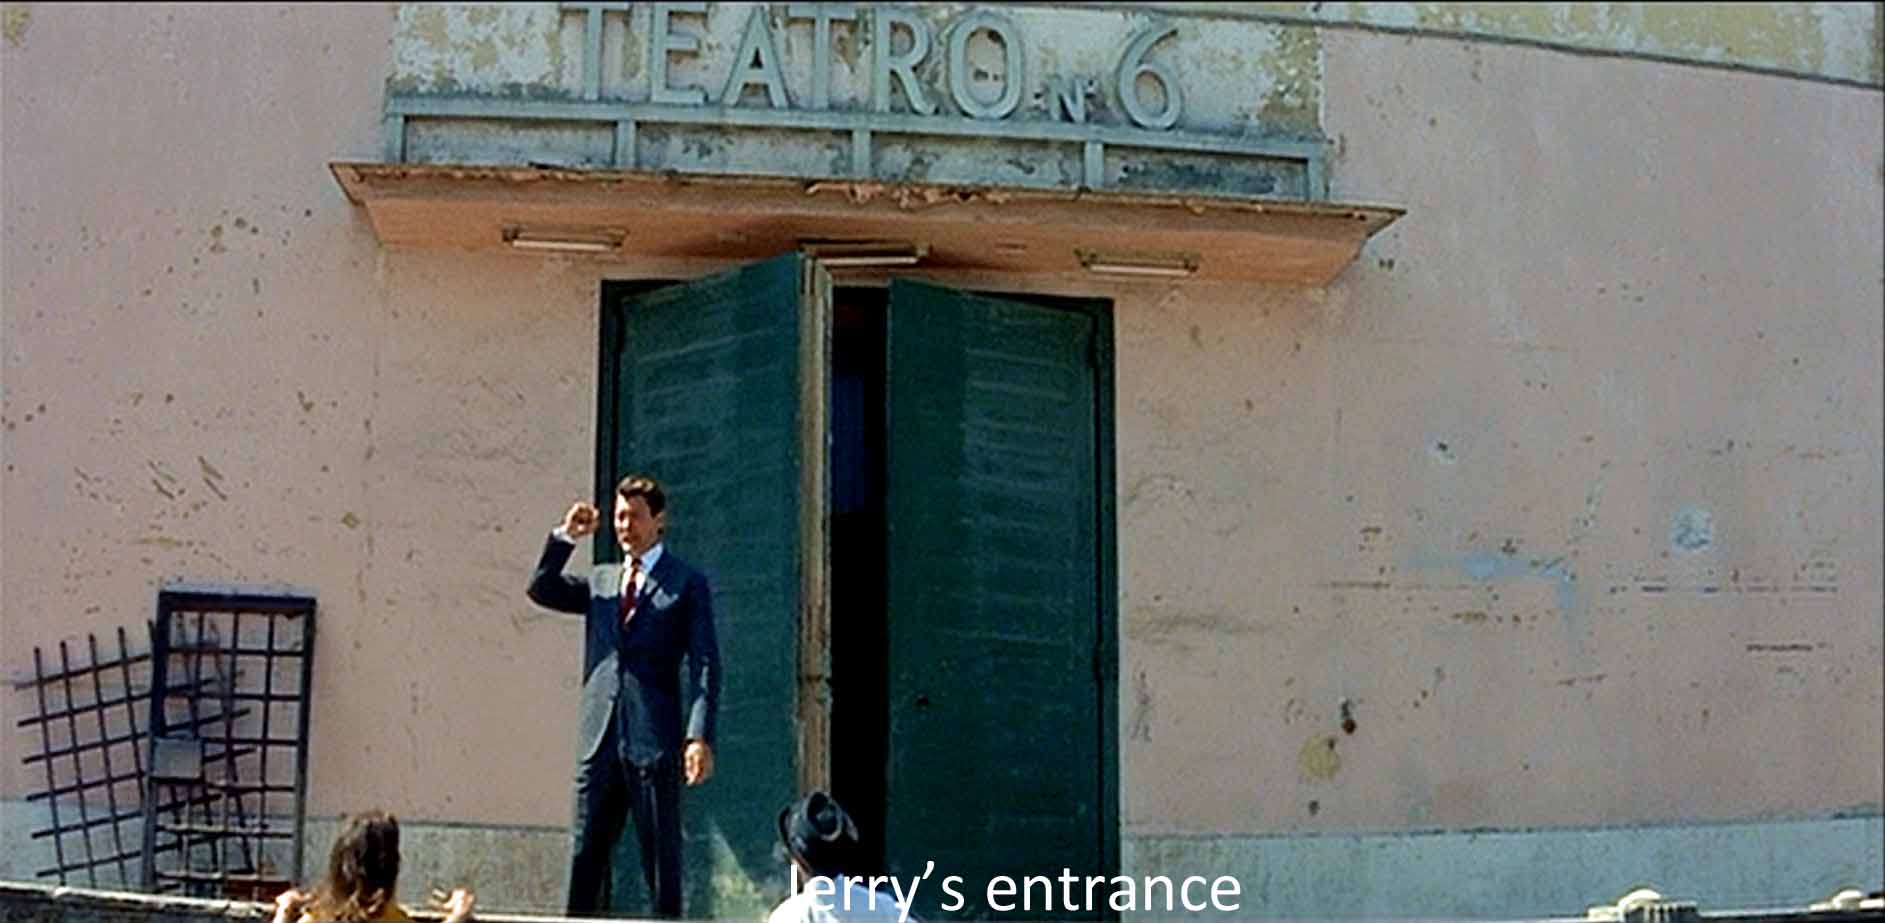 Jerry's entrance